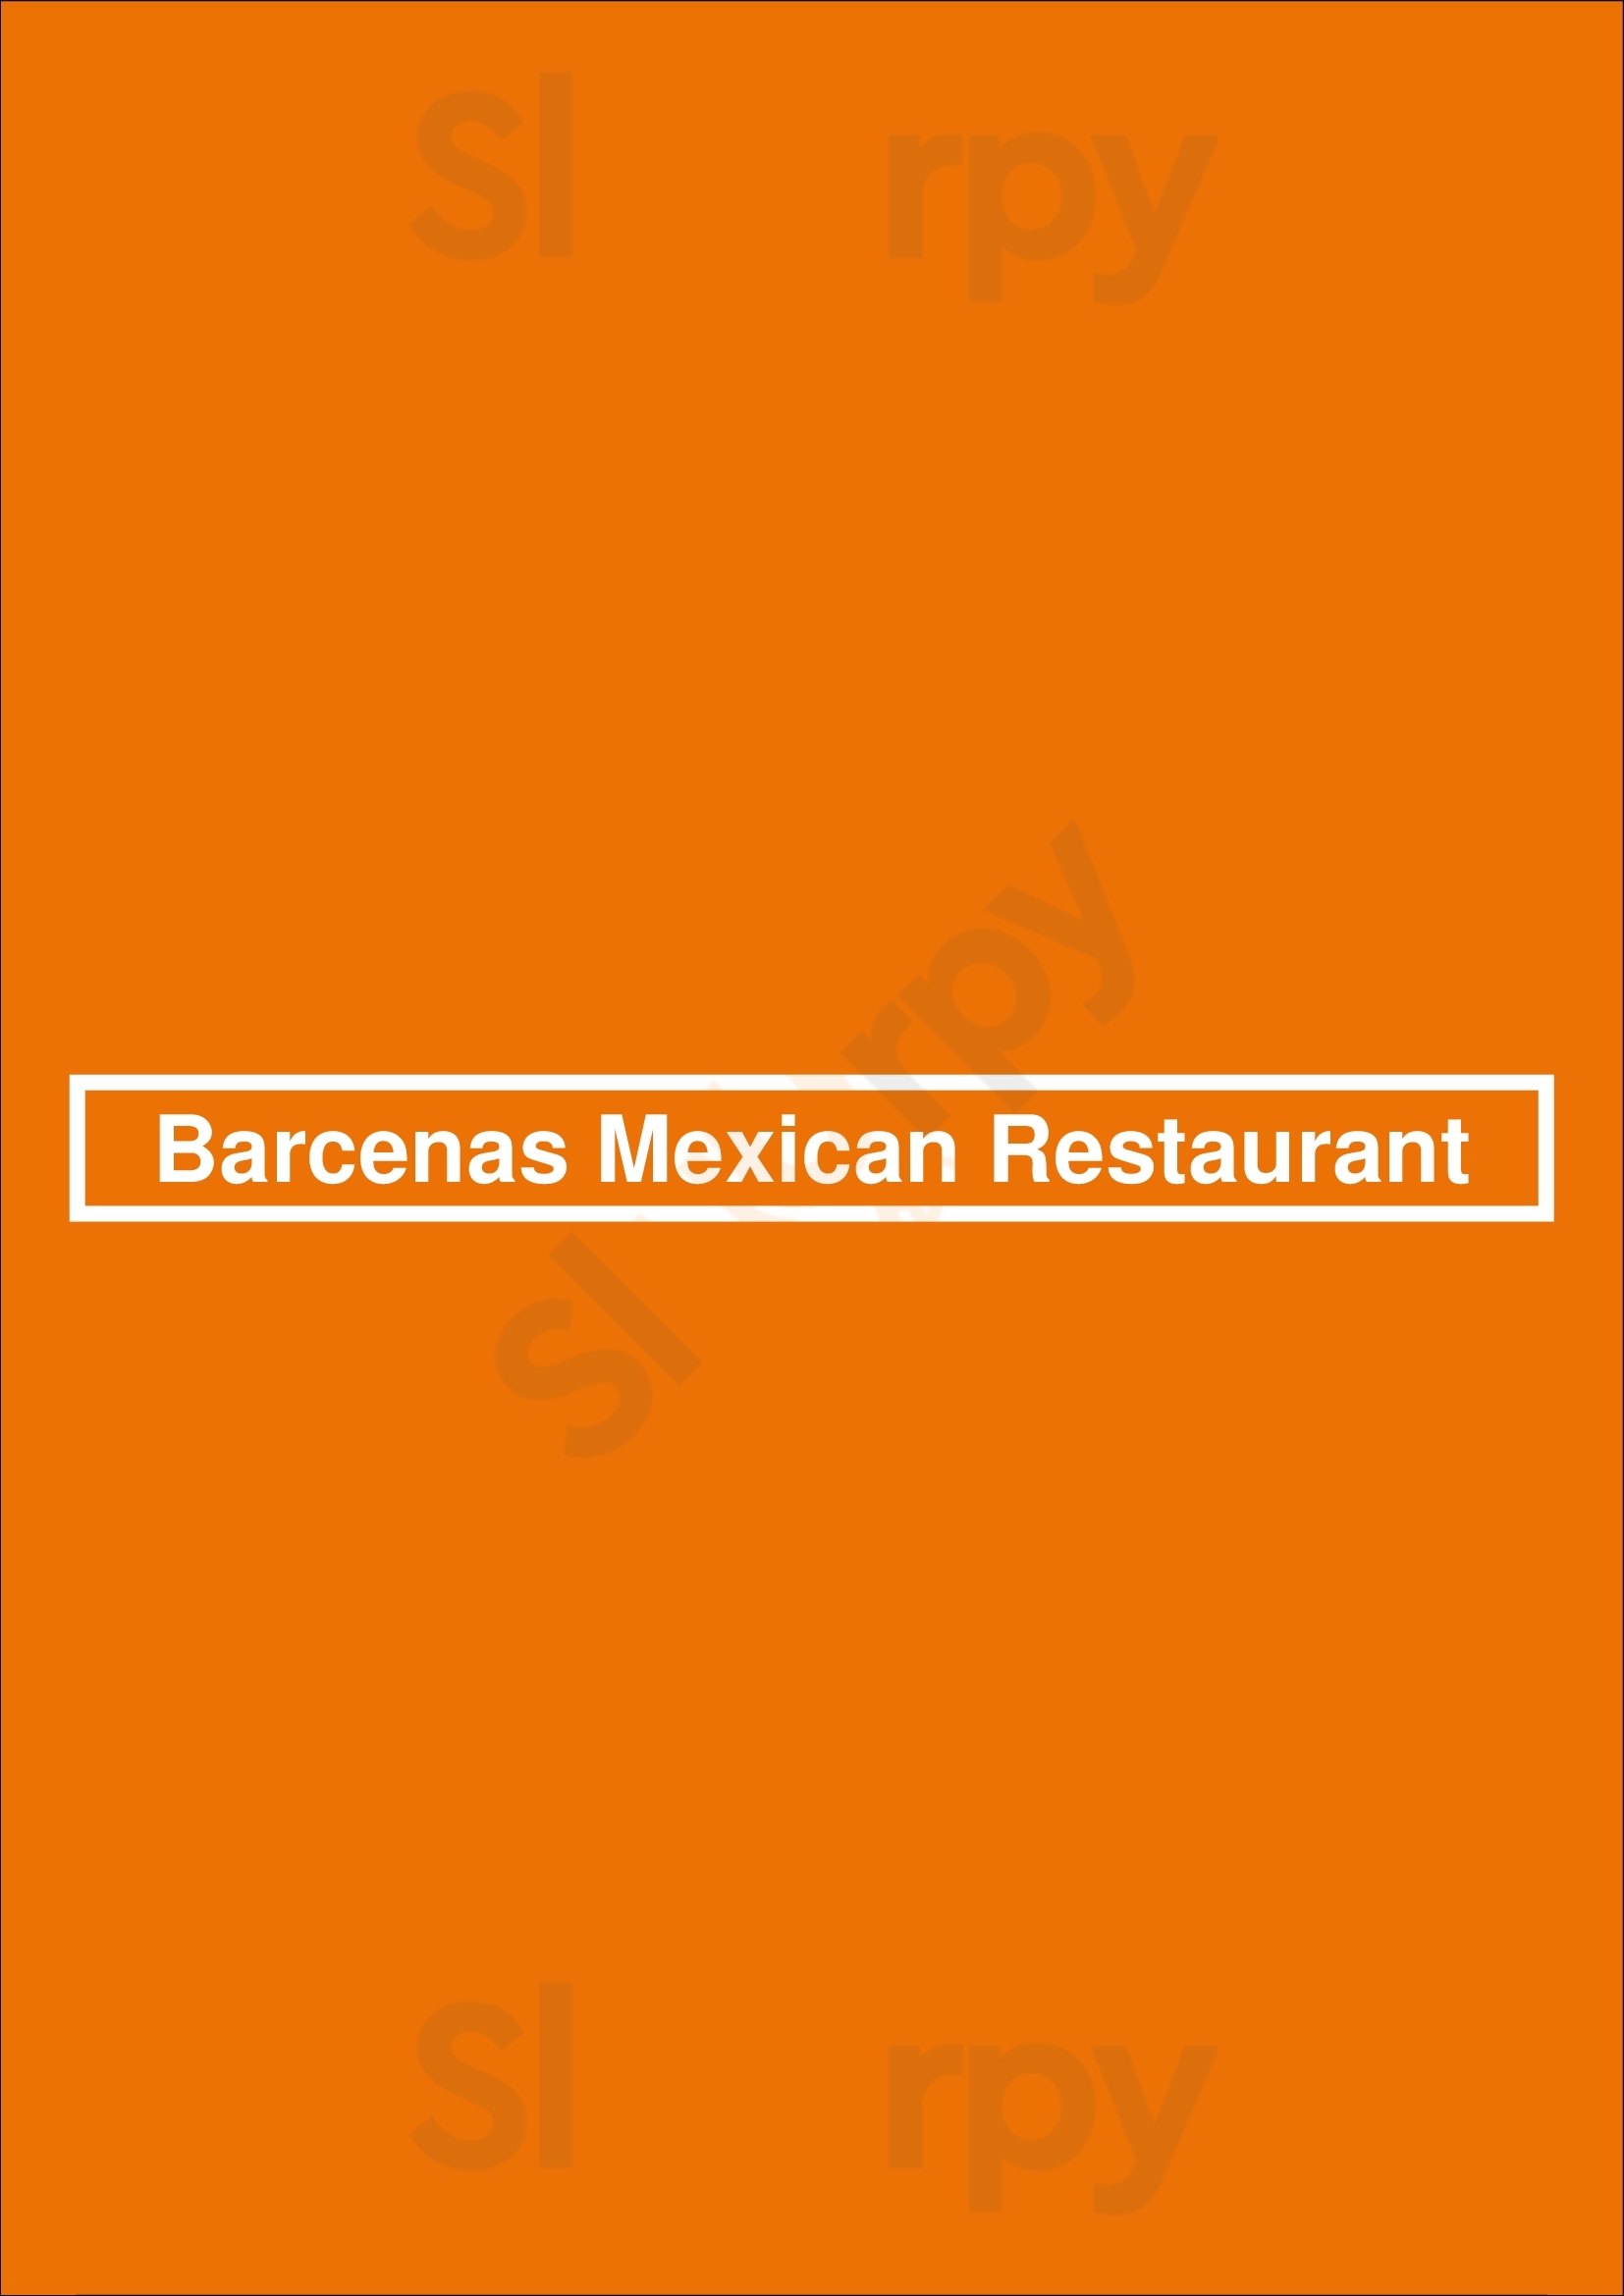 Barcenas Mexican Restaurant #2 Houston Menu - 1